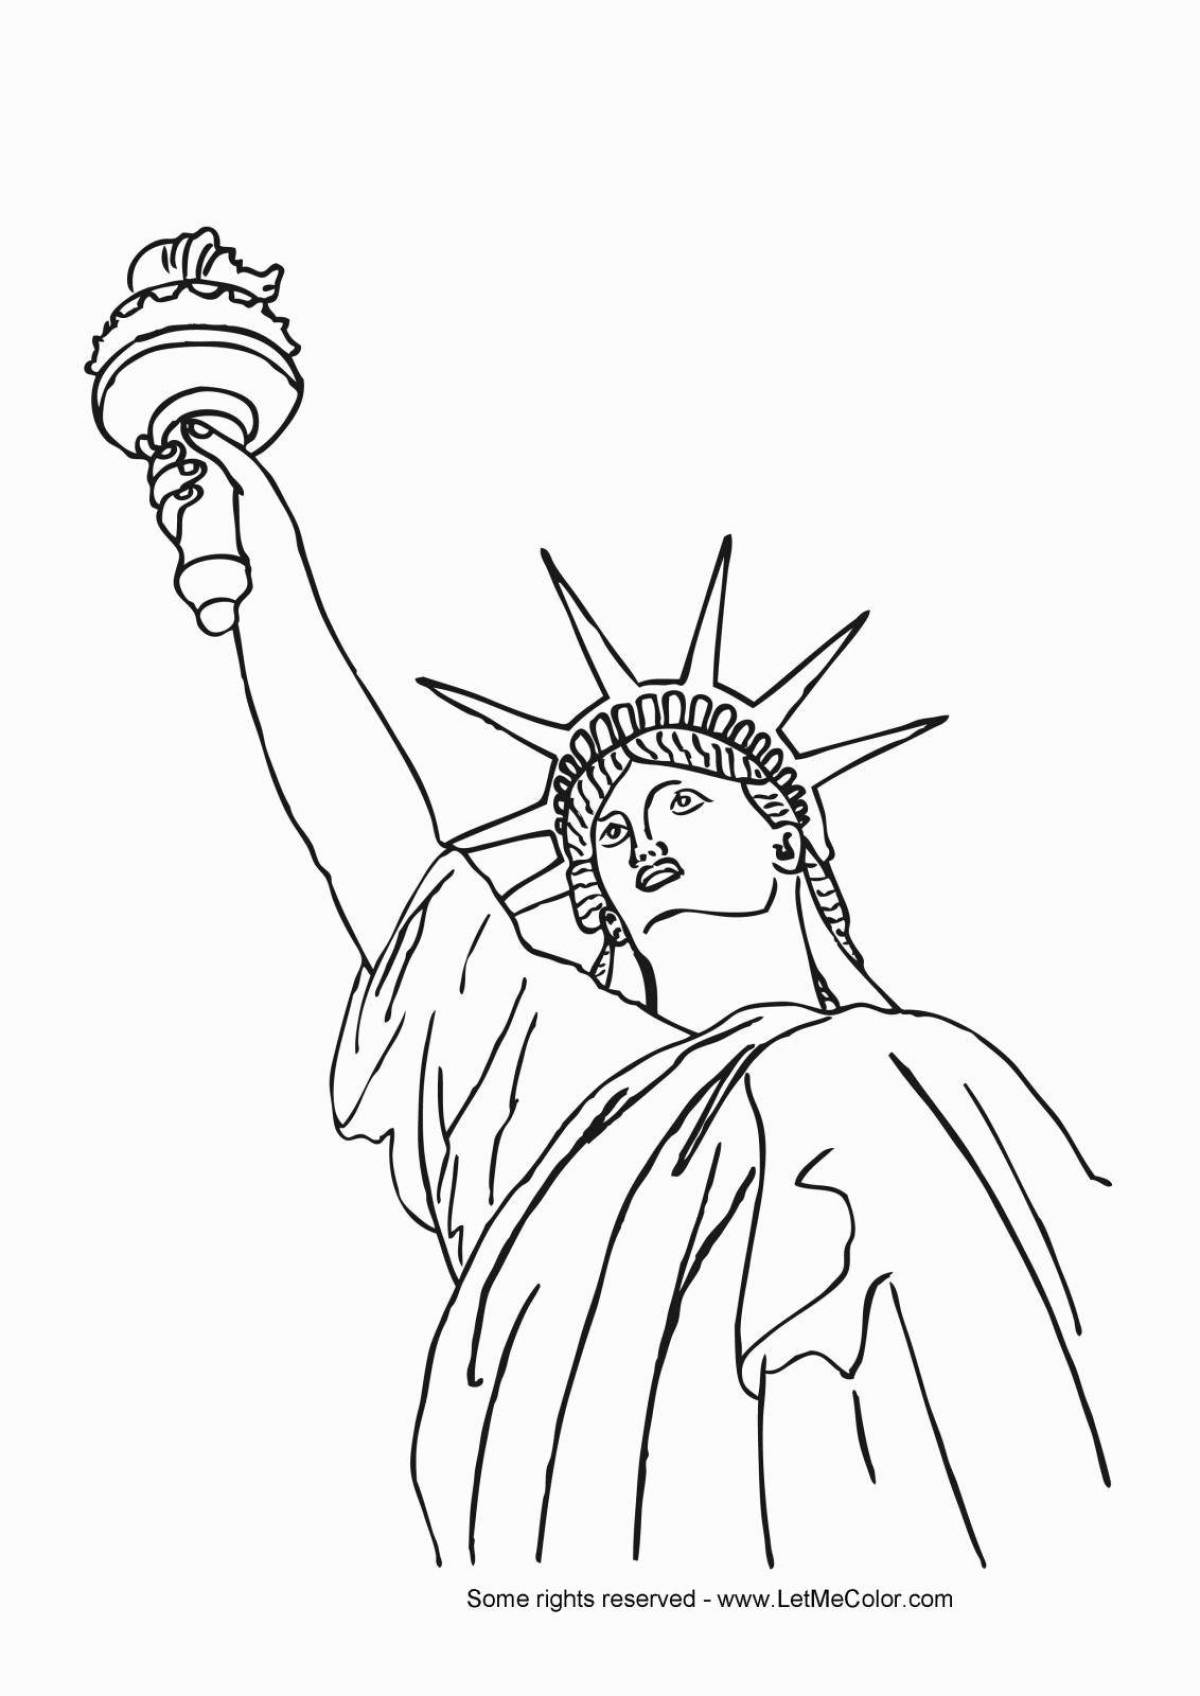 Statue of Liberty #4